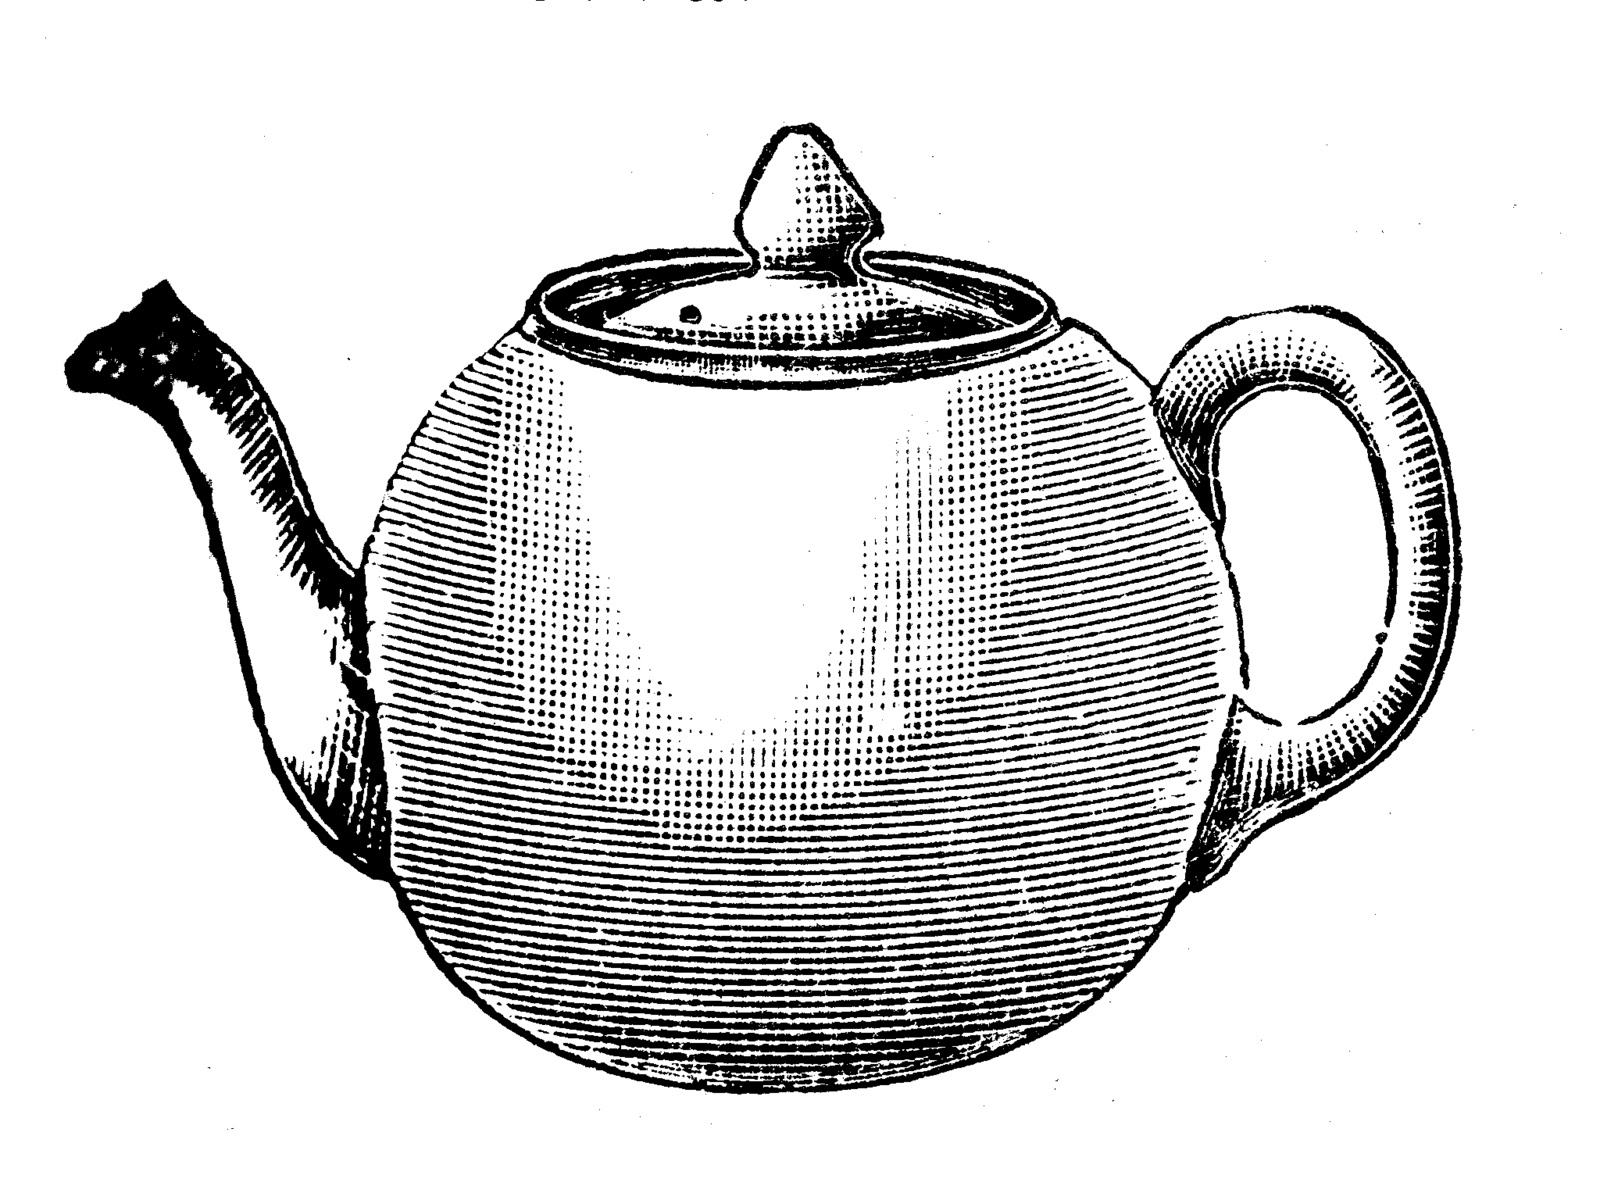 Free vintage clip art images: Vintage tea party crockery